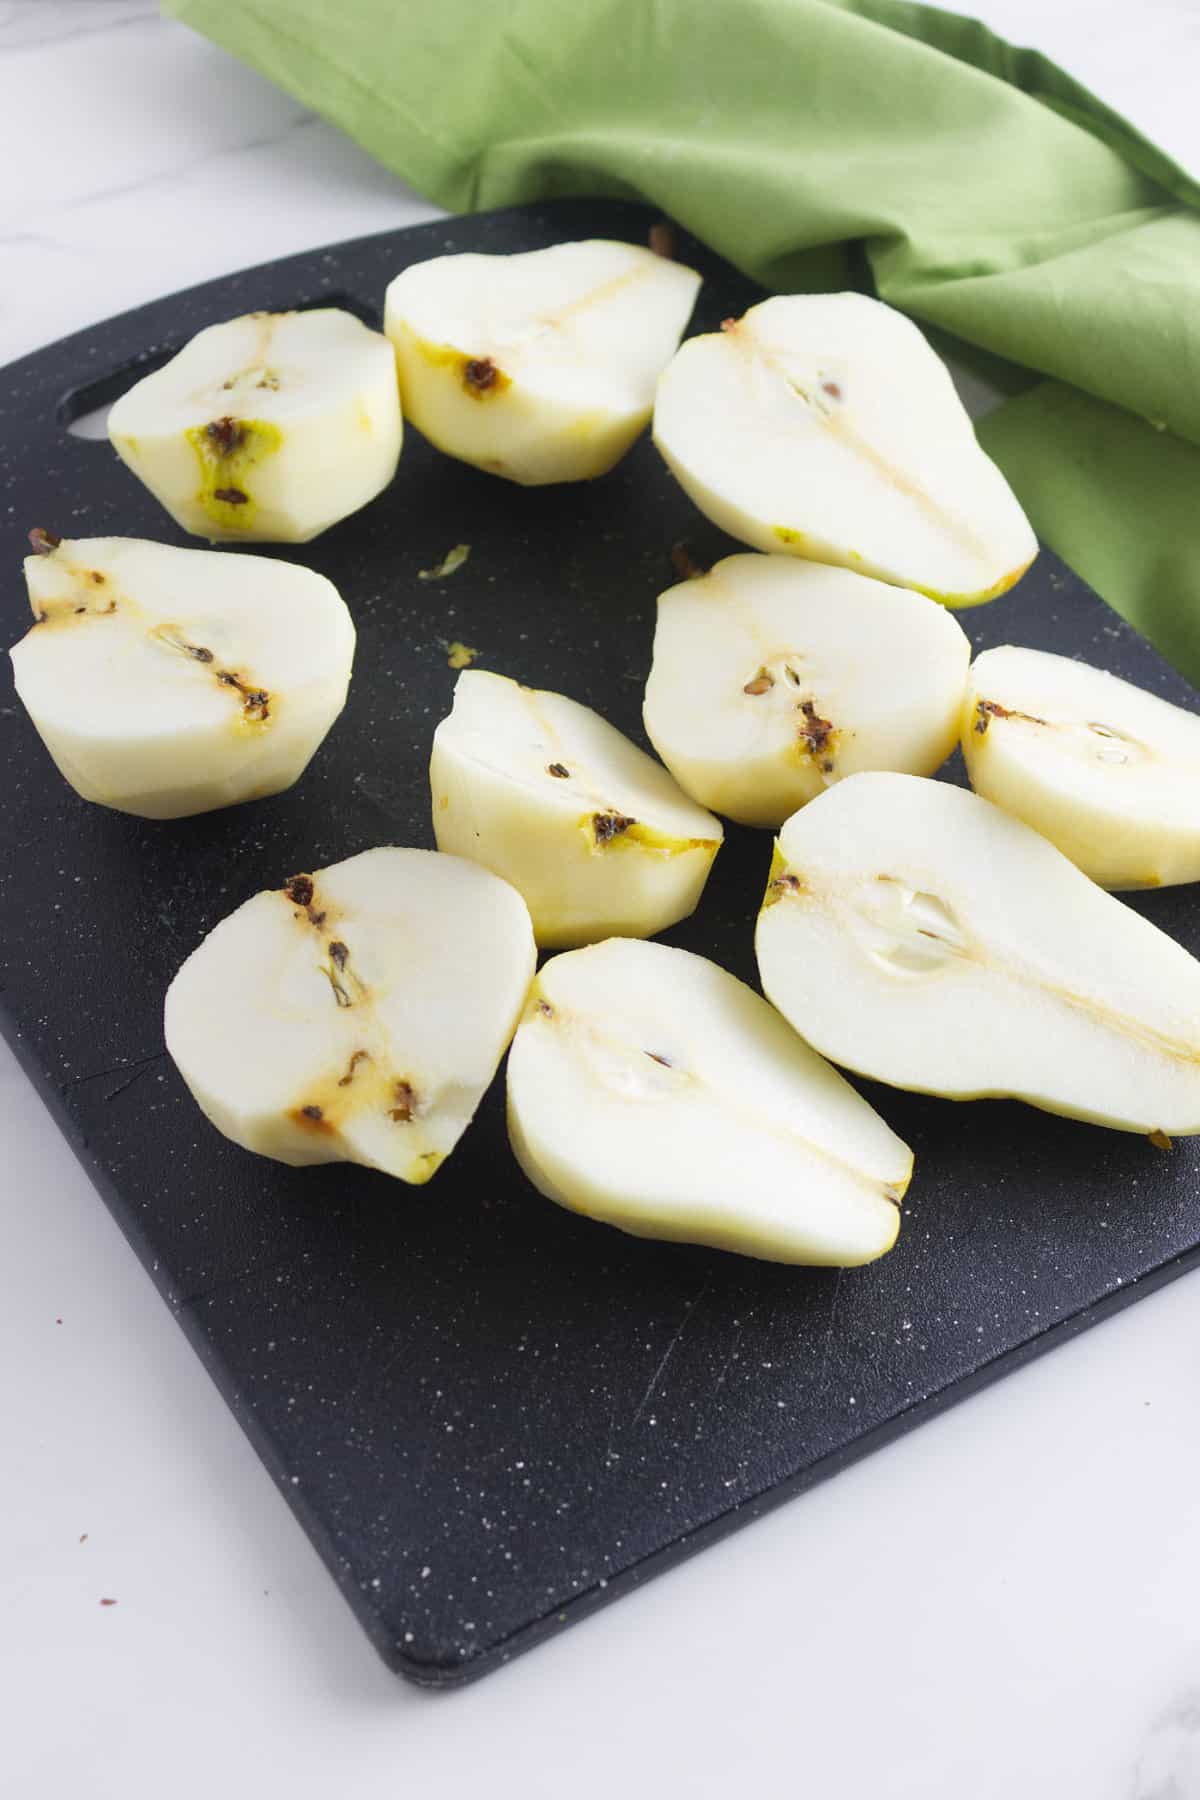 peeled and halved pears.